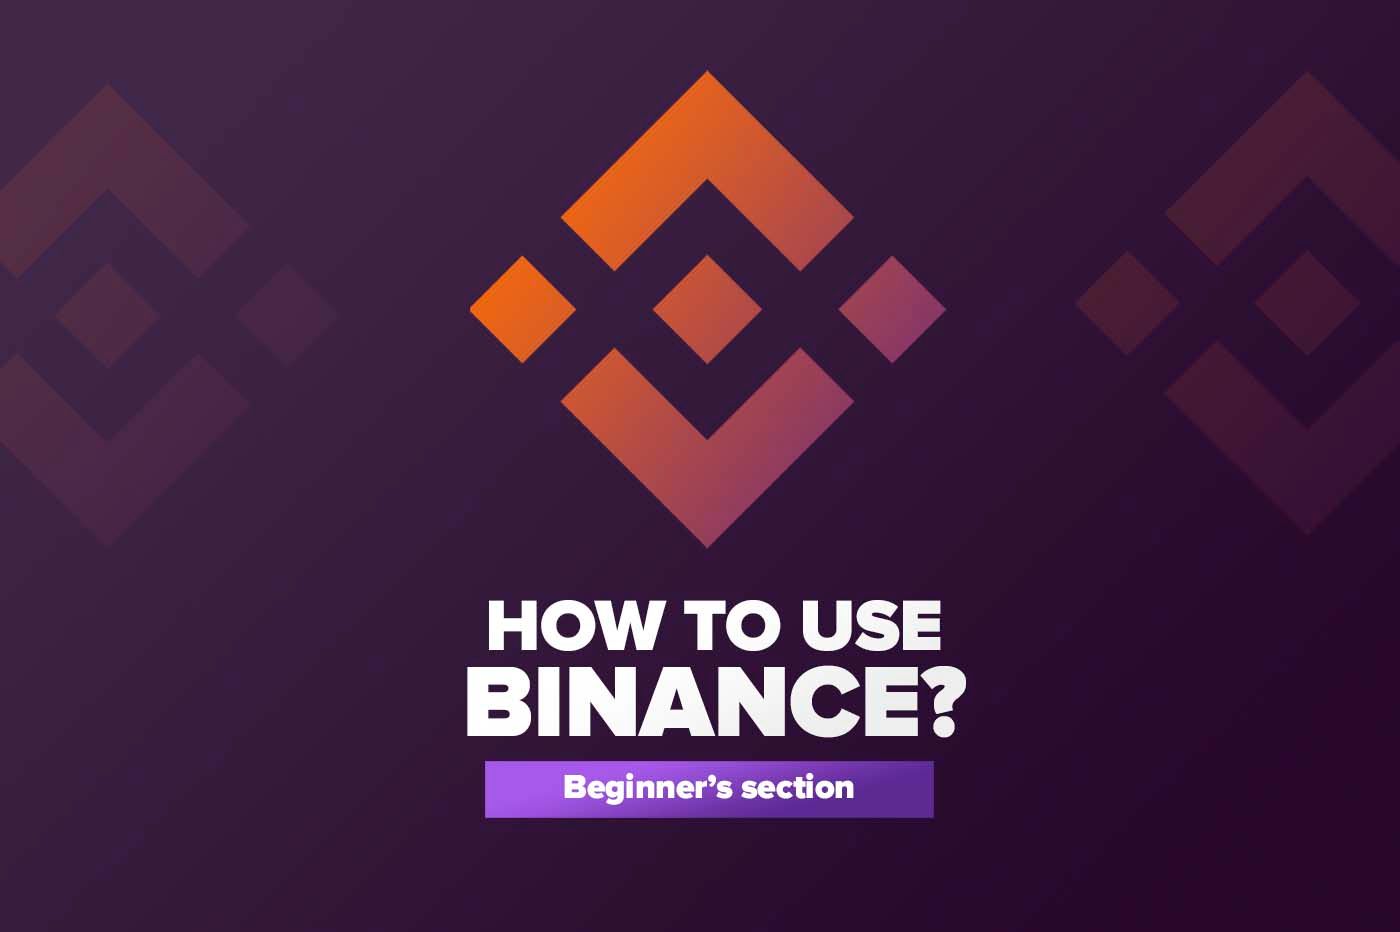 Article How to use Binance?